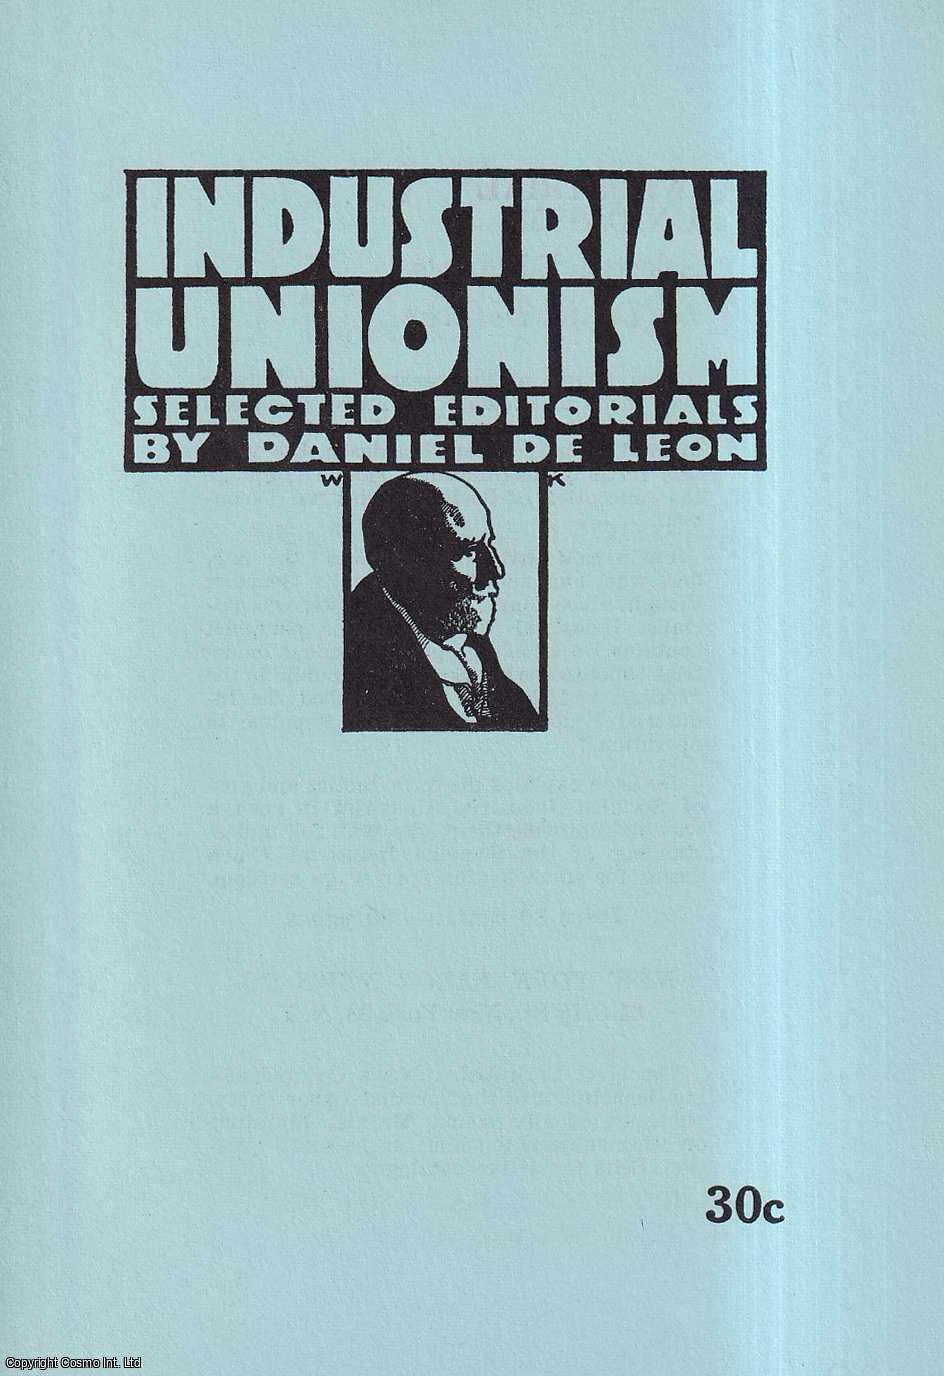 Daniel de Leon - Industrial Unionism; Selected Editorials by Daniel de Leon.